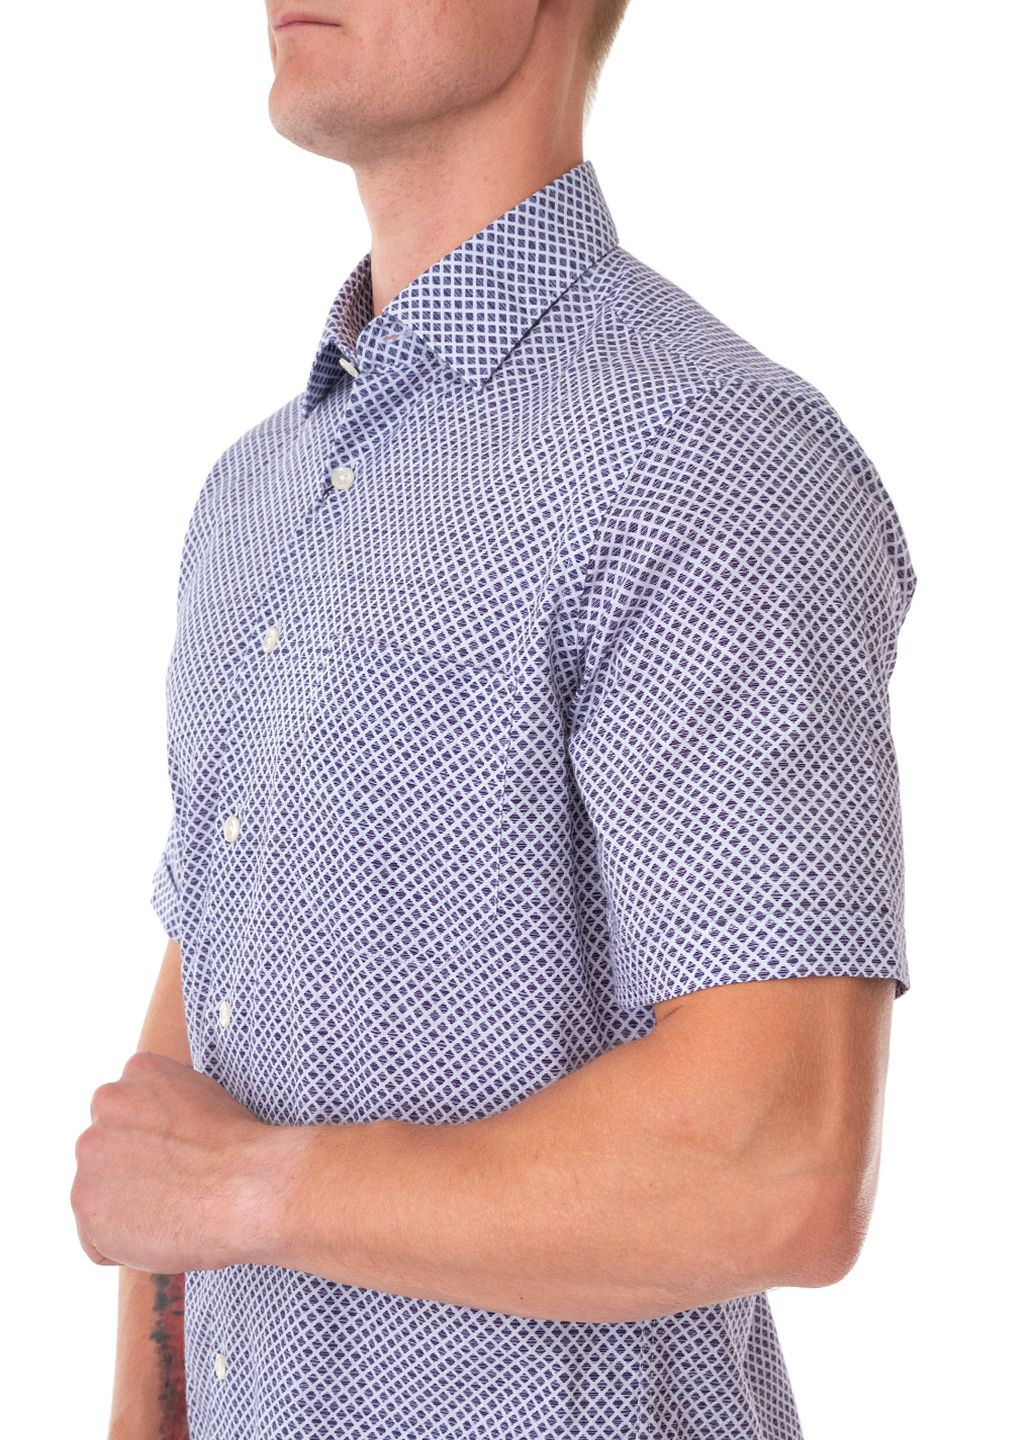 Цветная рубашка с геометрическим узором Roy Robson